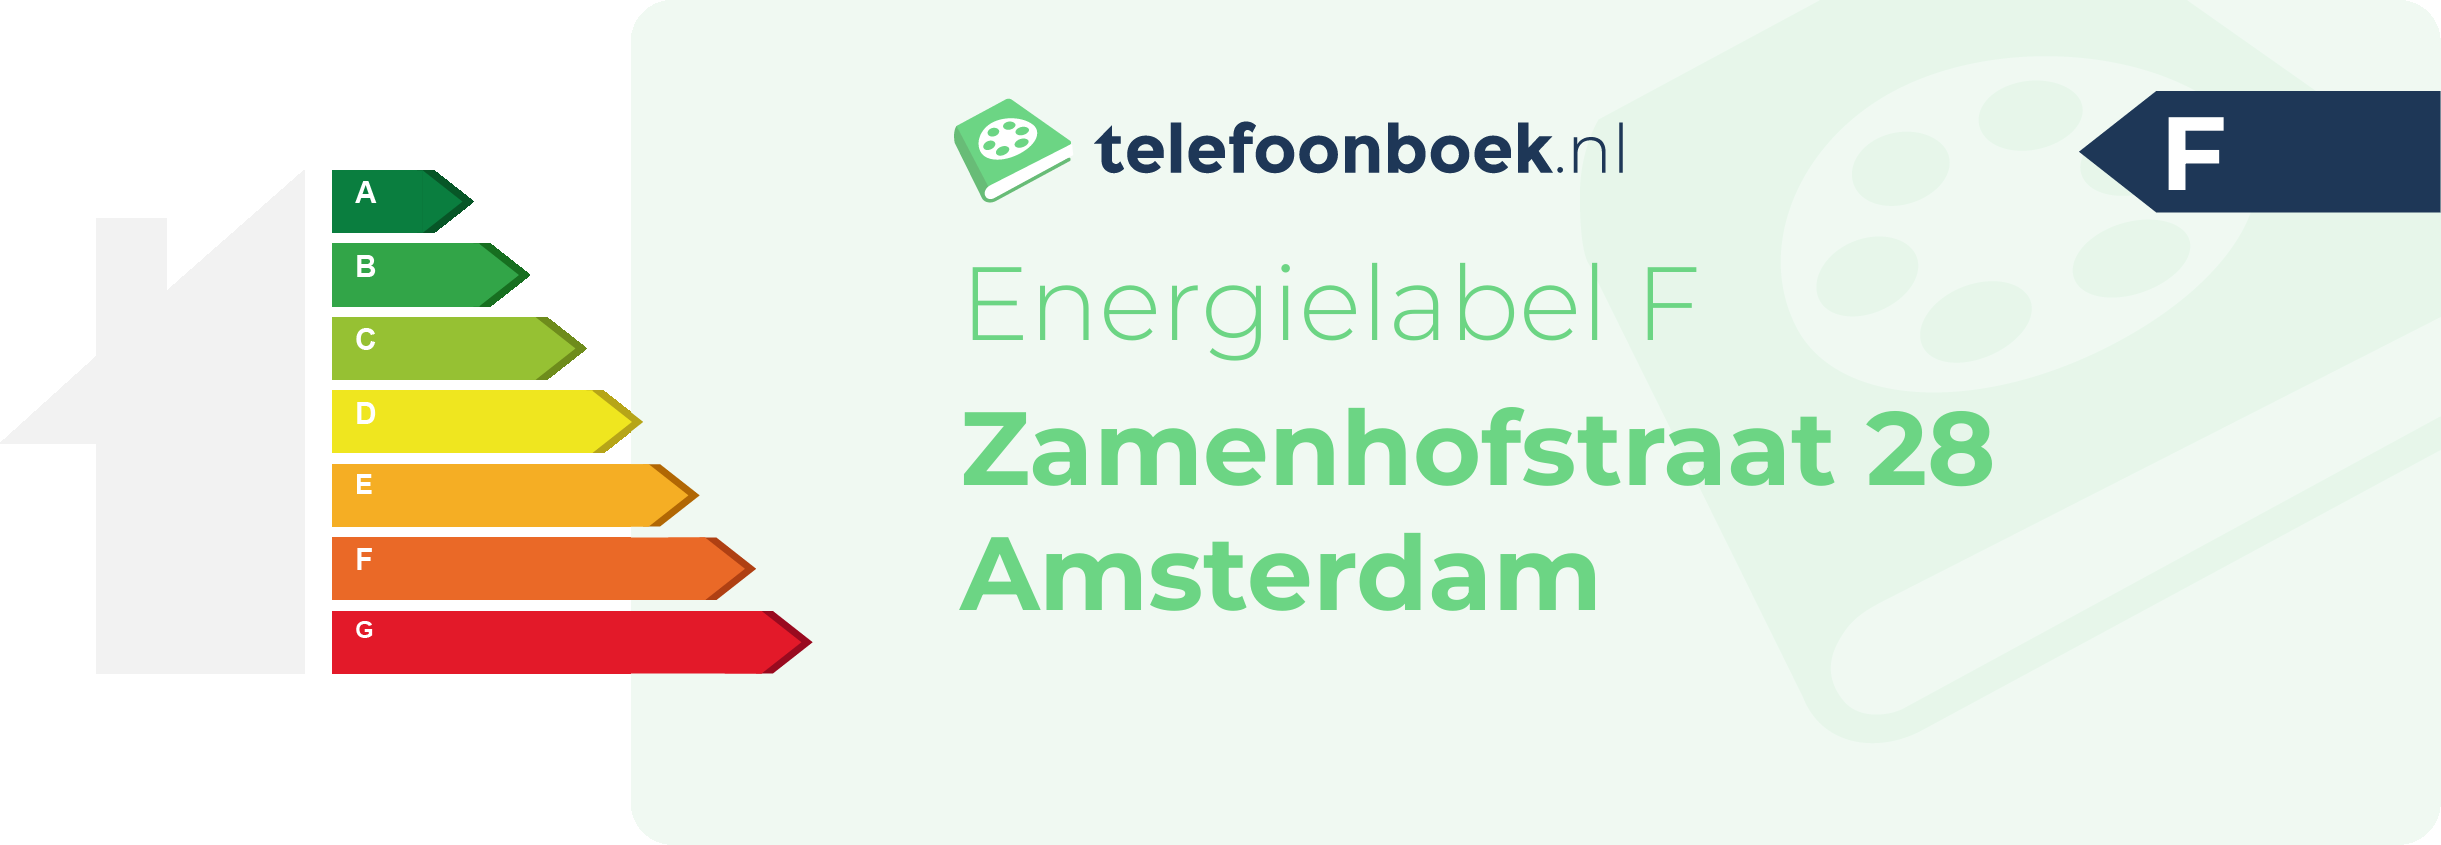 Energielabel Zamenhofstraat 28 Amsterdam